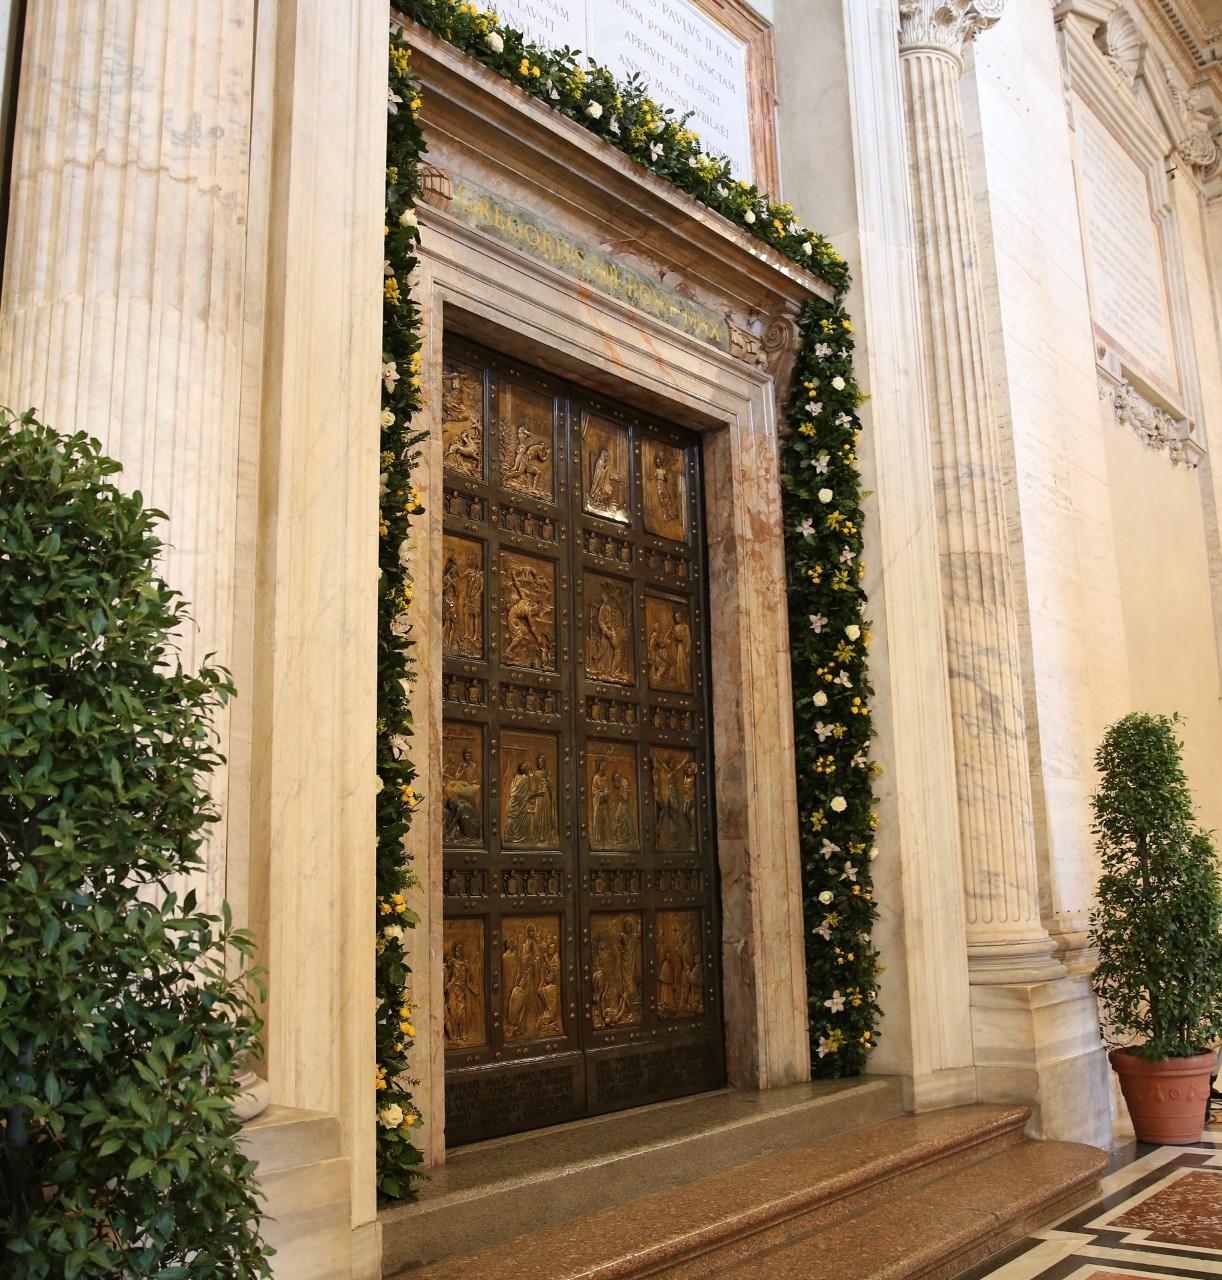 The Holy Door of Saint Peter’s Basilica